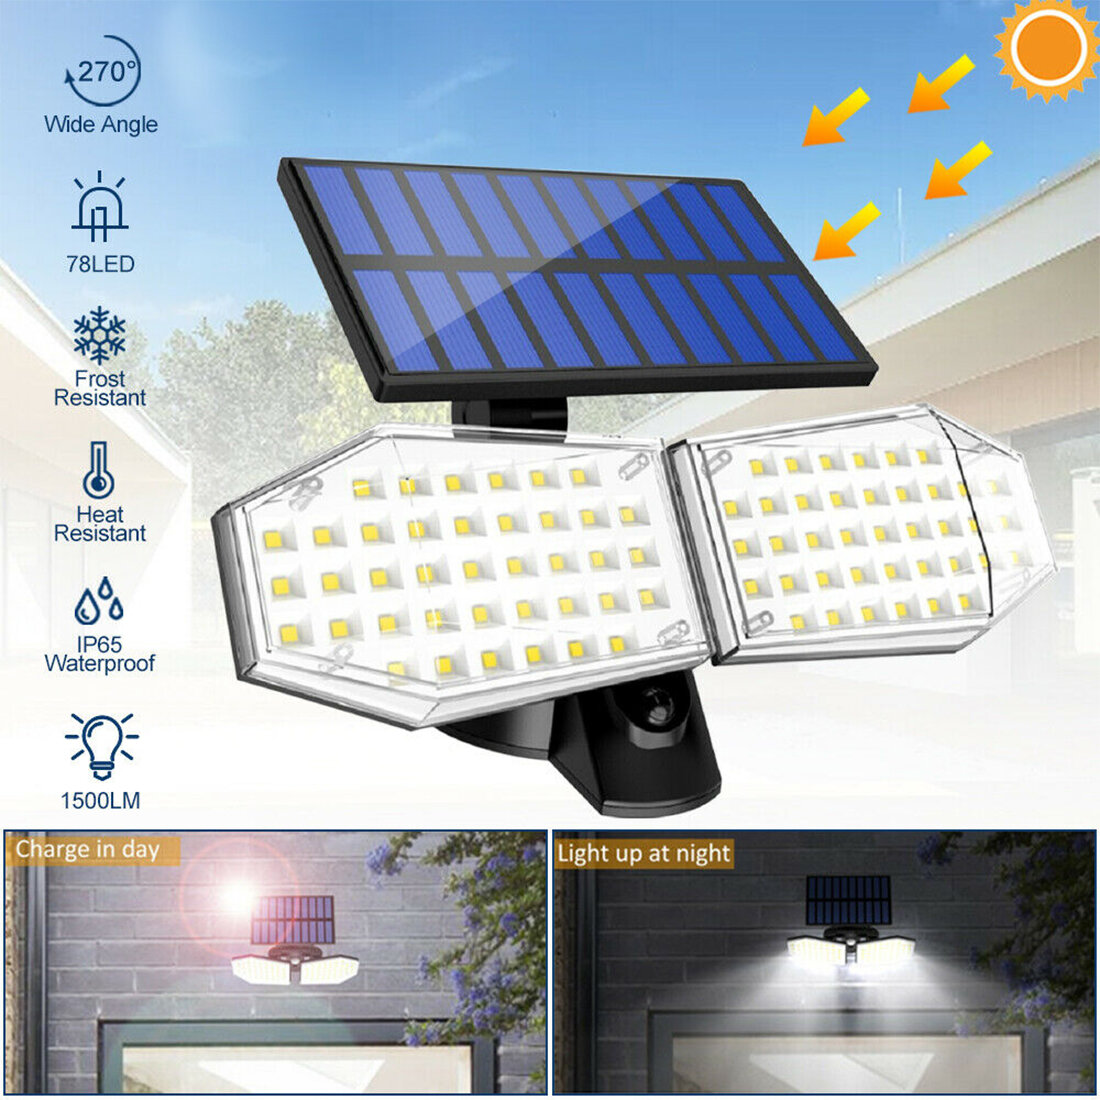 2 Modes Solar Power Dusk to Dawn Light Outdoor Yard Garden Wall Lamp Waterproof 